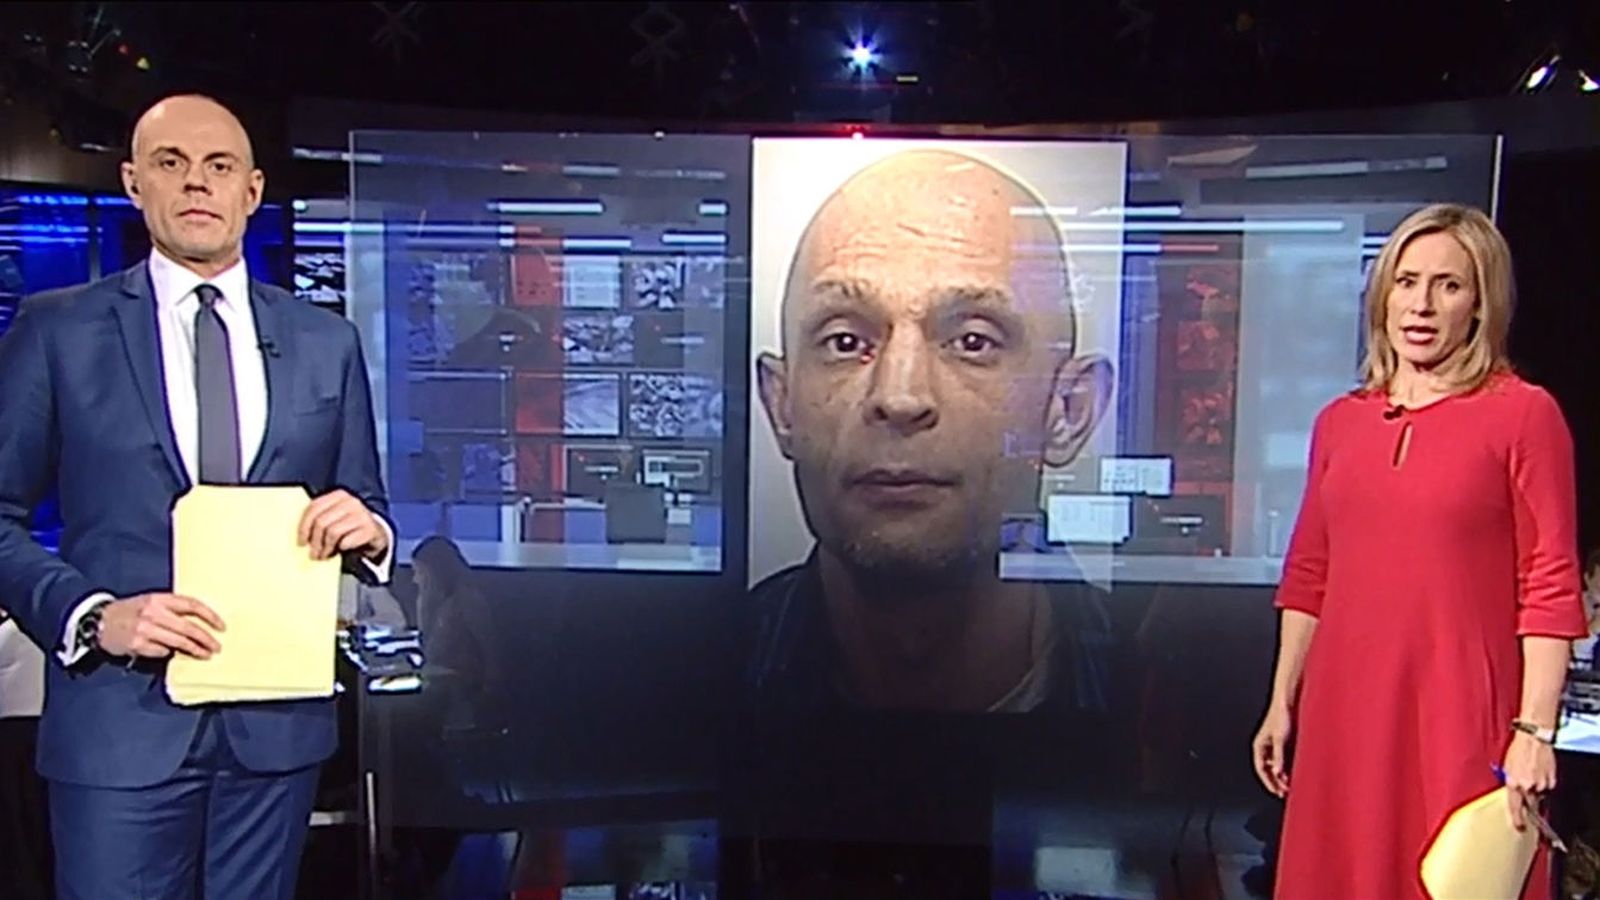 Foto: Jason Mohammed, presentador de la BBC, a la izquierda. Al fondo, la imagen del criminal Viktor Lakatos (BBC)